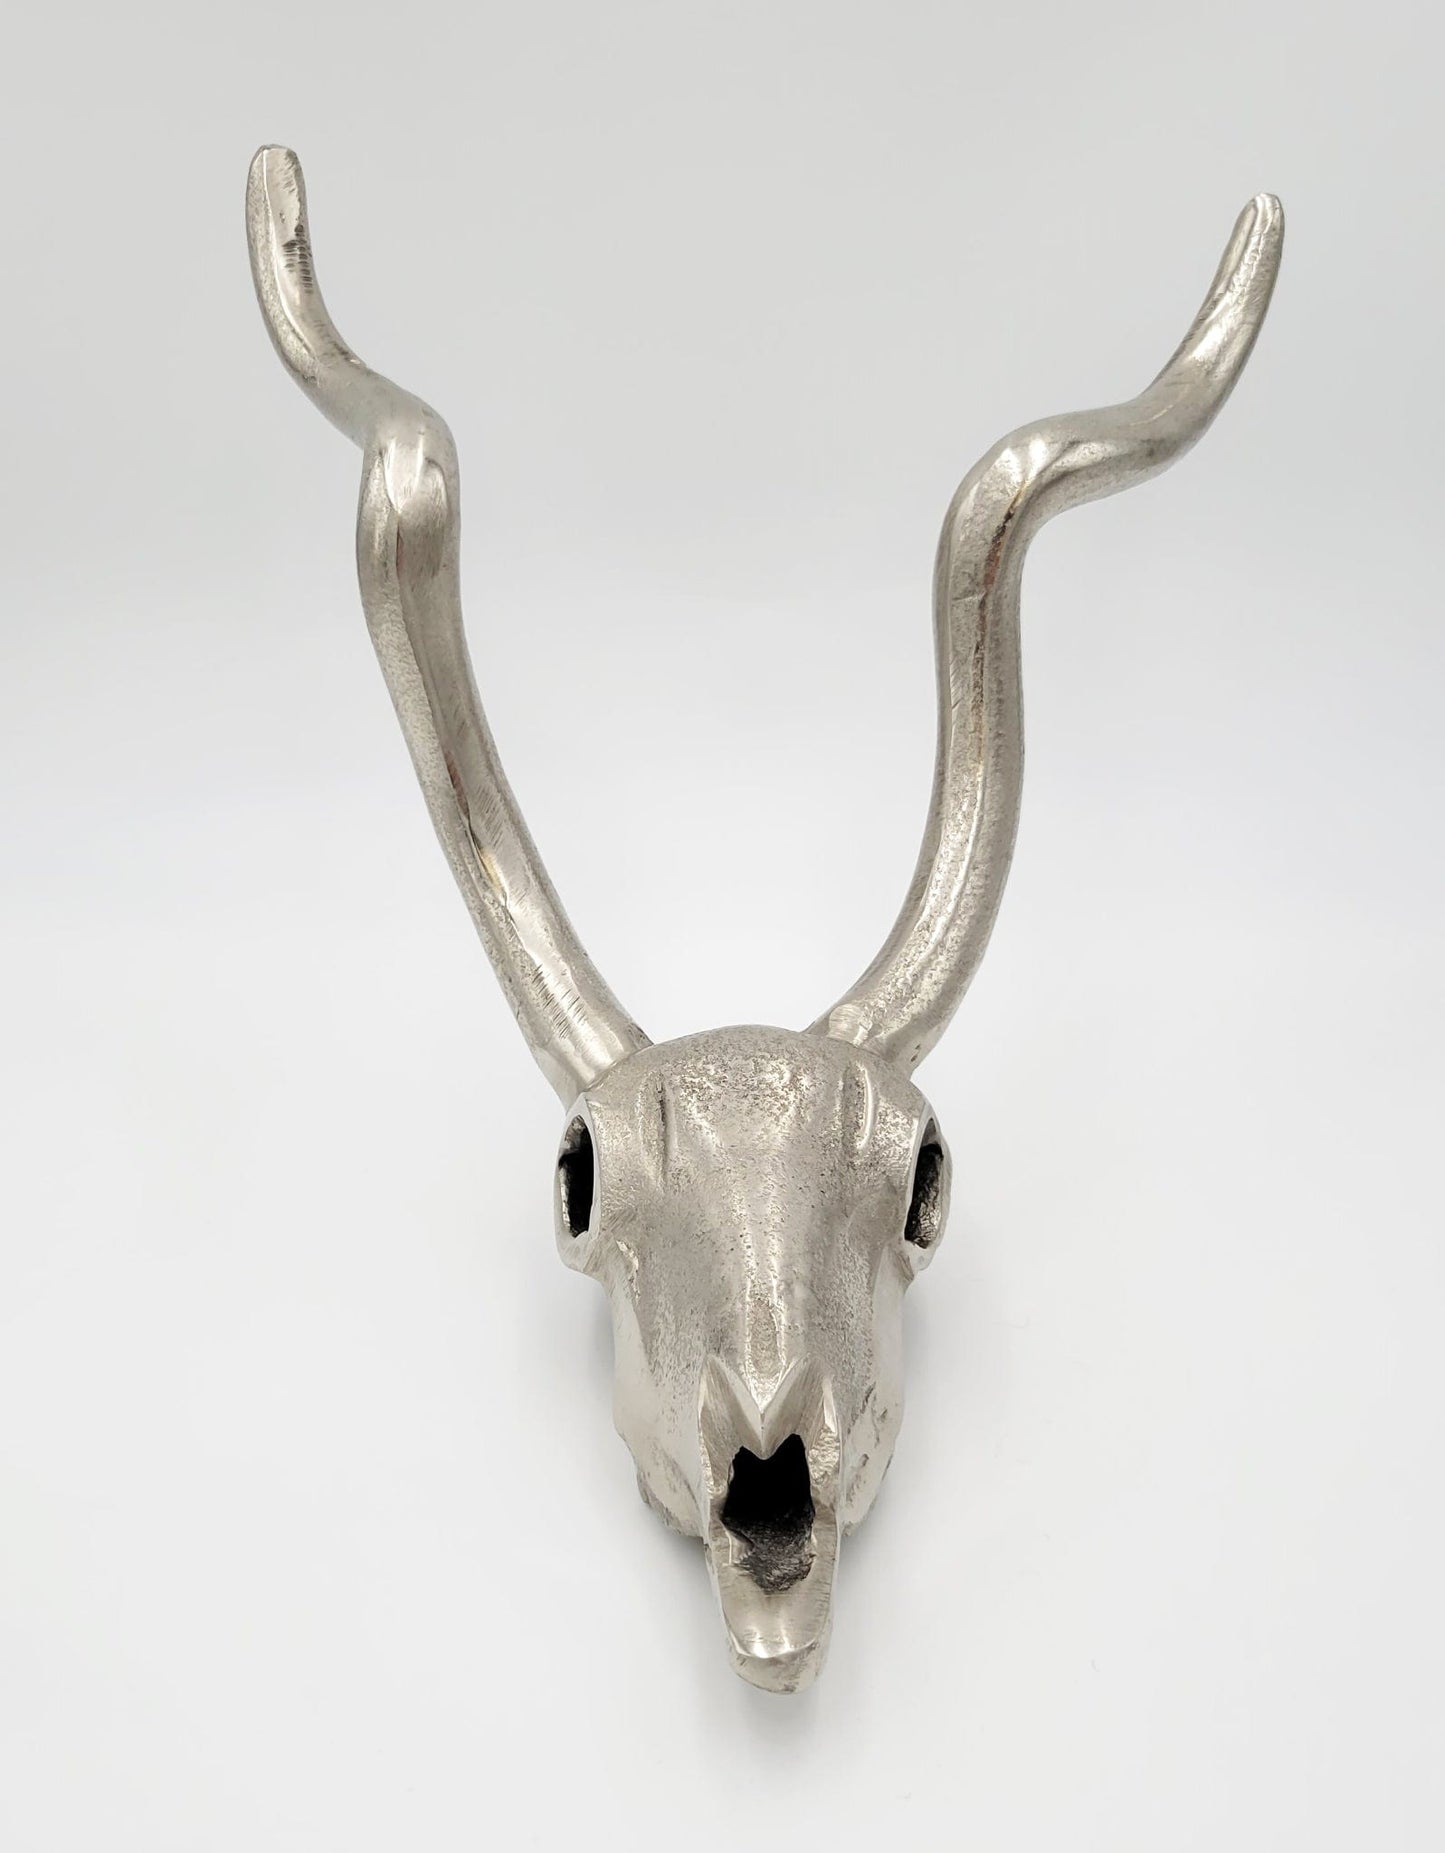 Antelope Skull Sculpture Large Vintage Aluminum Cast Metal Modernist Antelope Kudu Skull Wall Sculpture